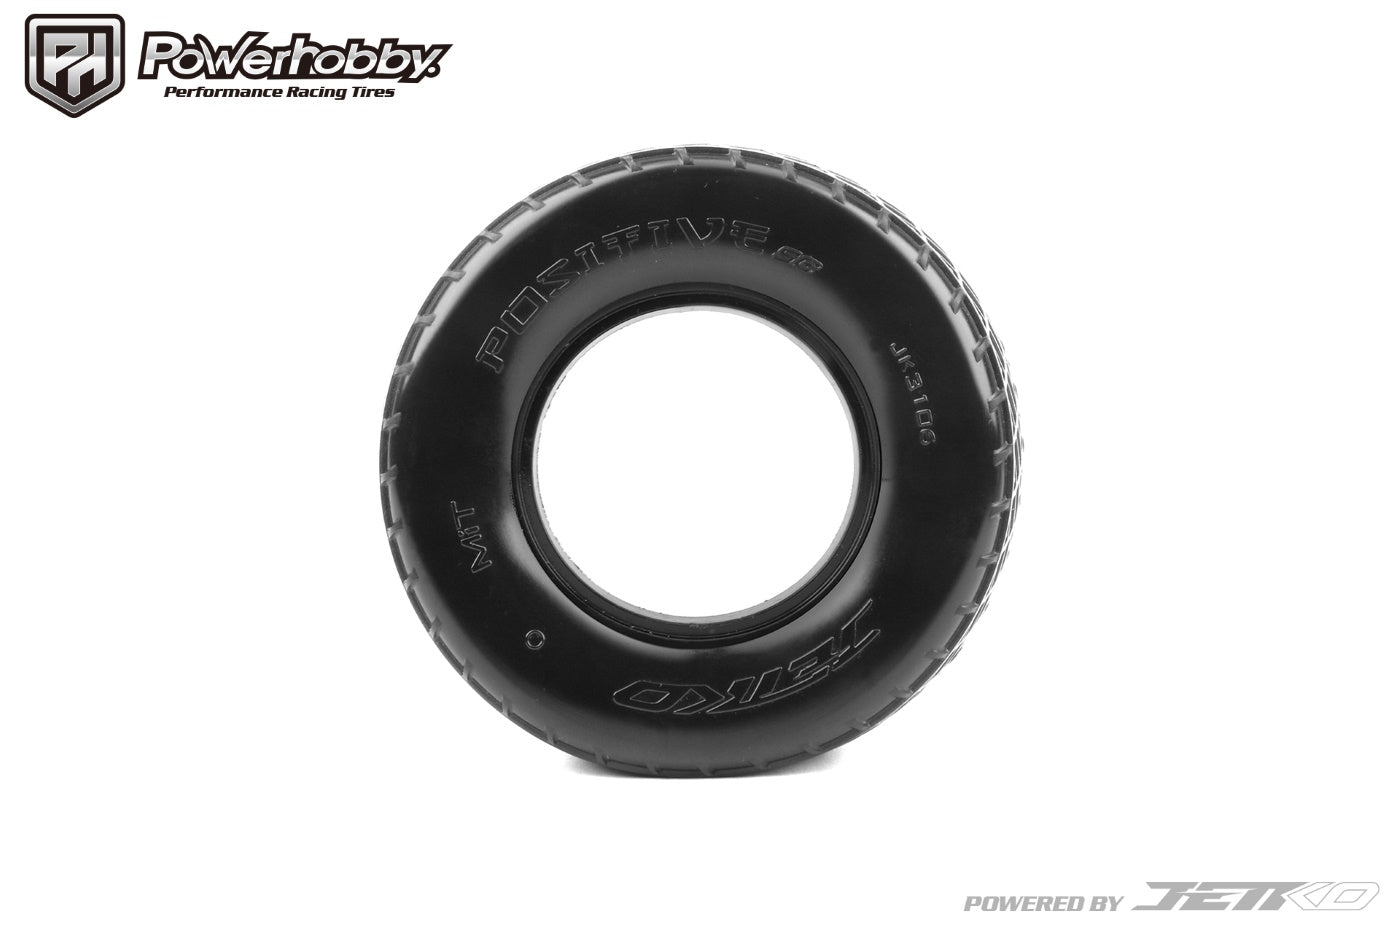 Powerhobby SC-Positive Short Course Tires Medium Soft.